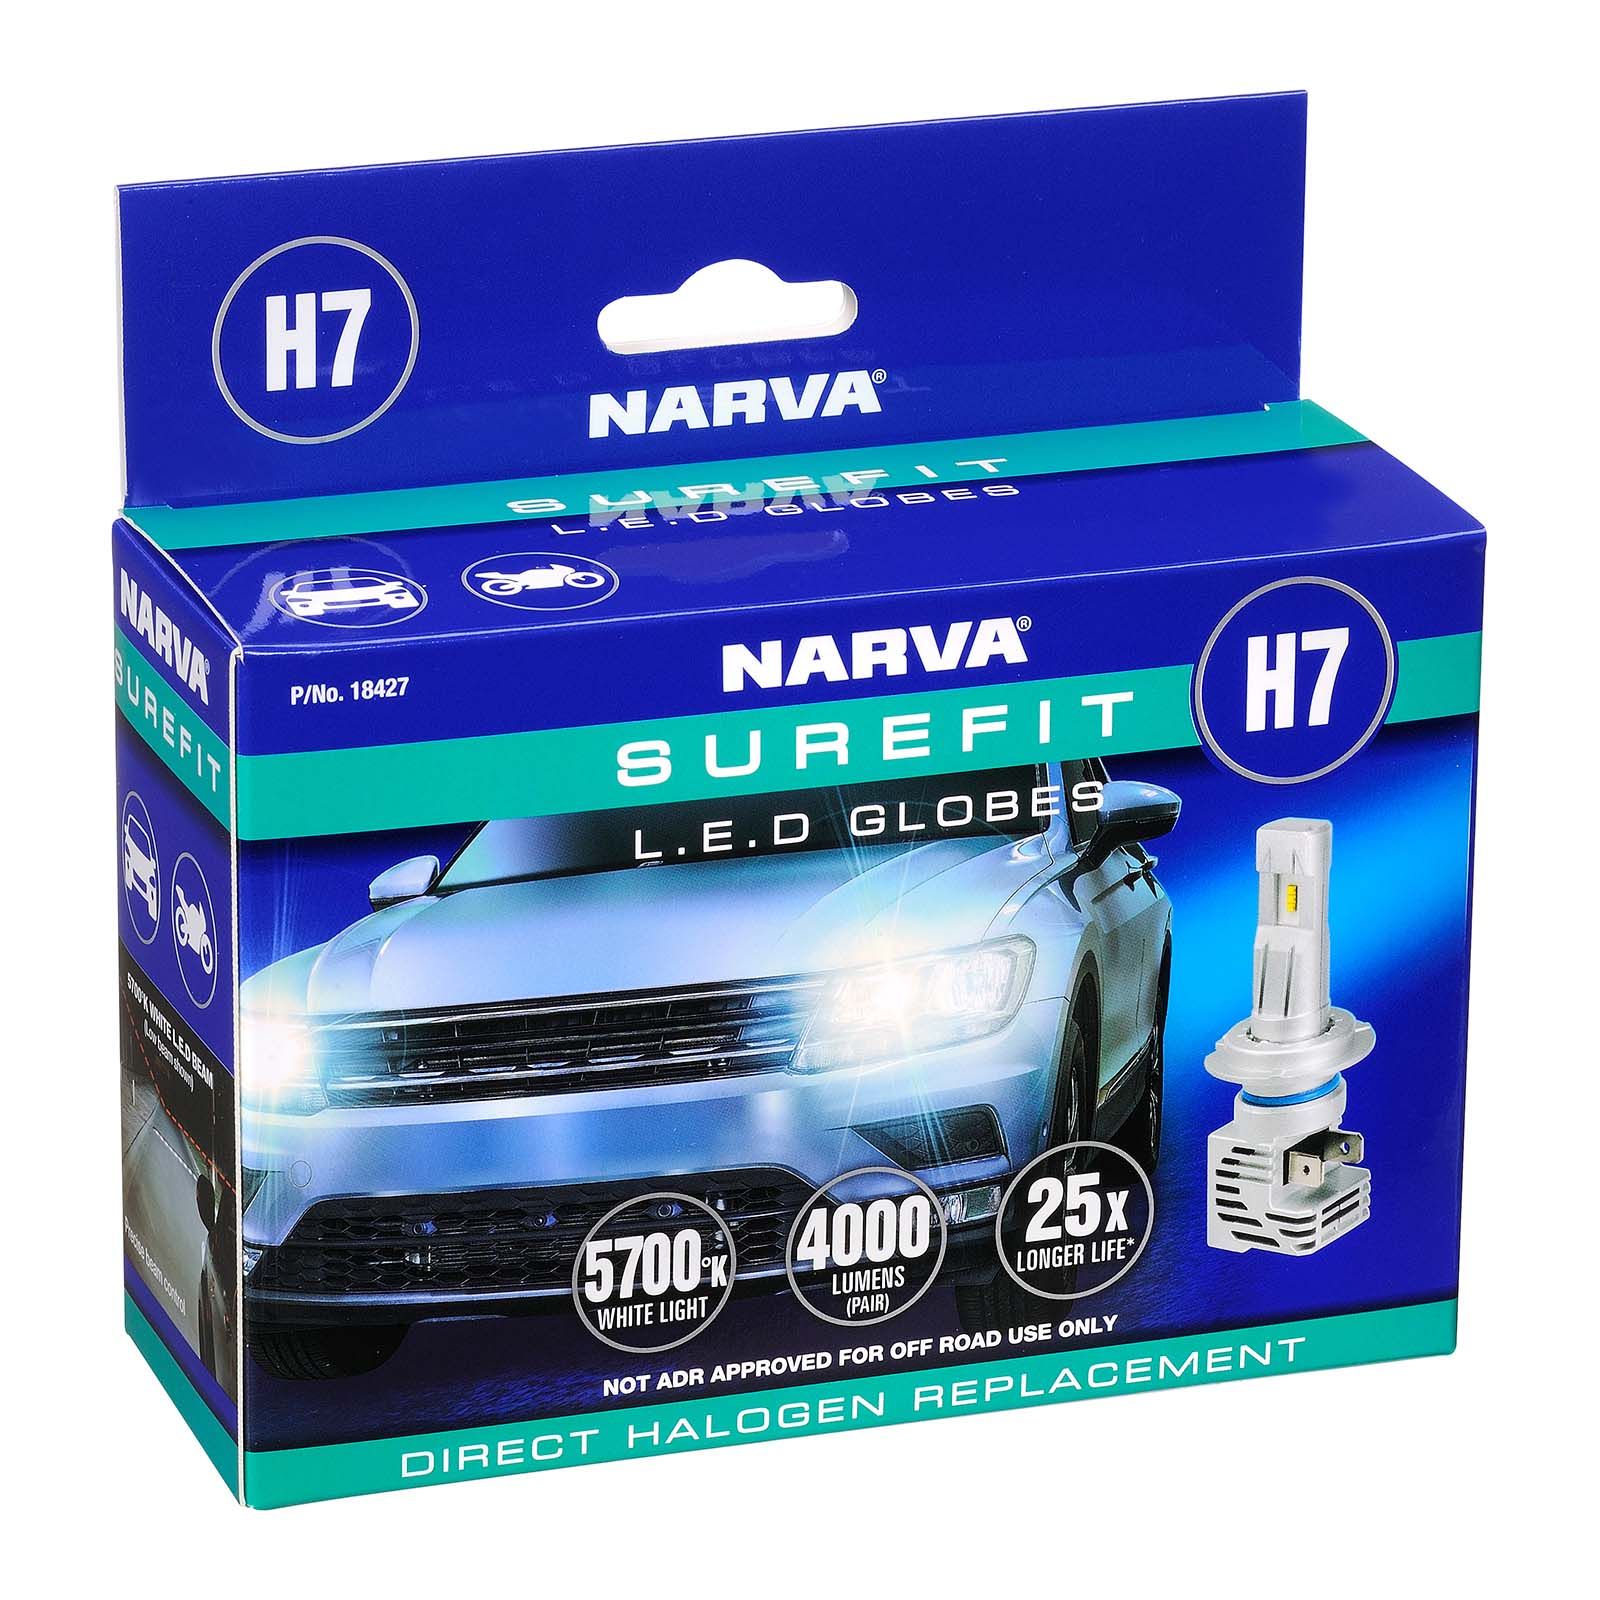 Komforauto - 🔆 Kit H7 LED NARVA 🇩🇪 ✓Feux de croisement